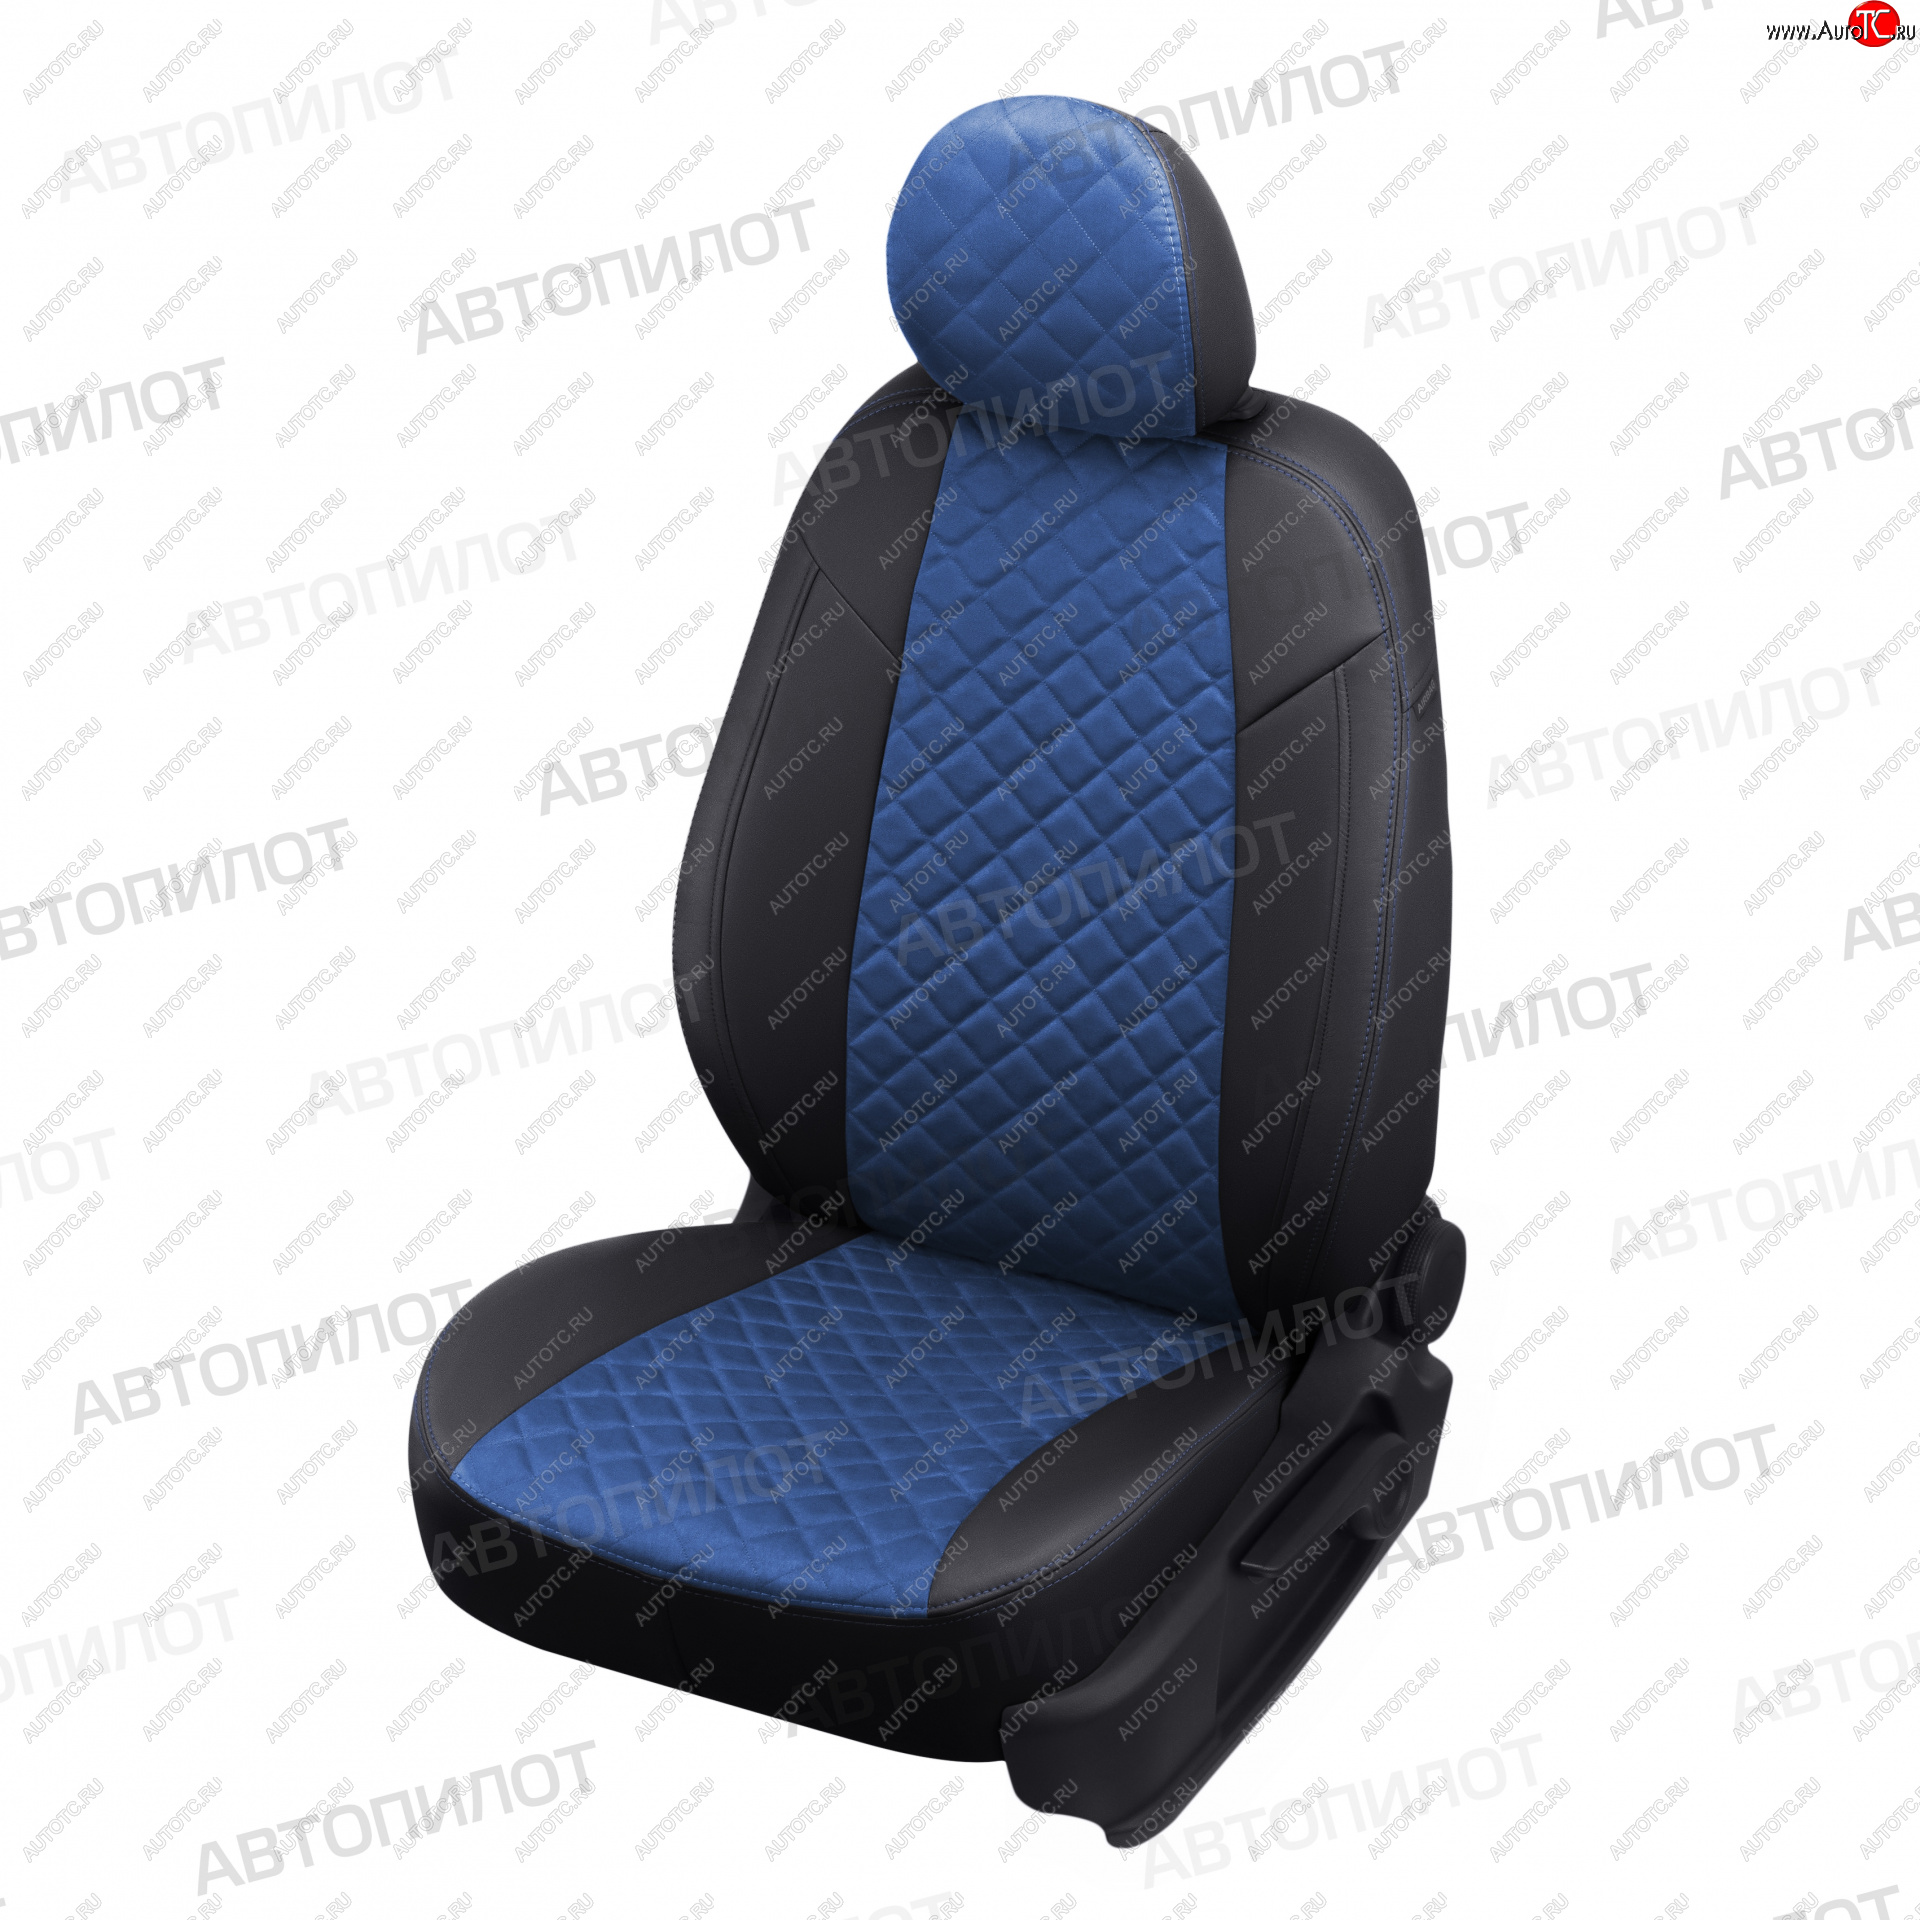 13 999 р. Чехлы сидений (экокожа/алькантара) Автопилот Ромб  KIA Optima  3 TF (2010-2016) (черный/синий)